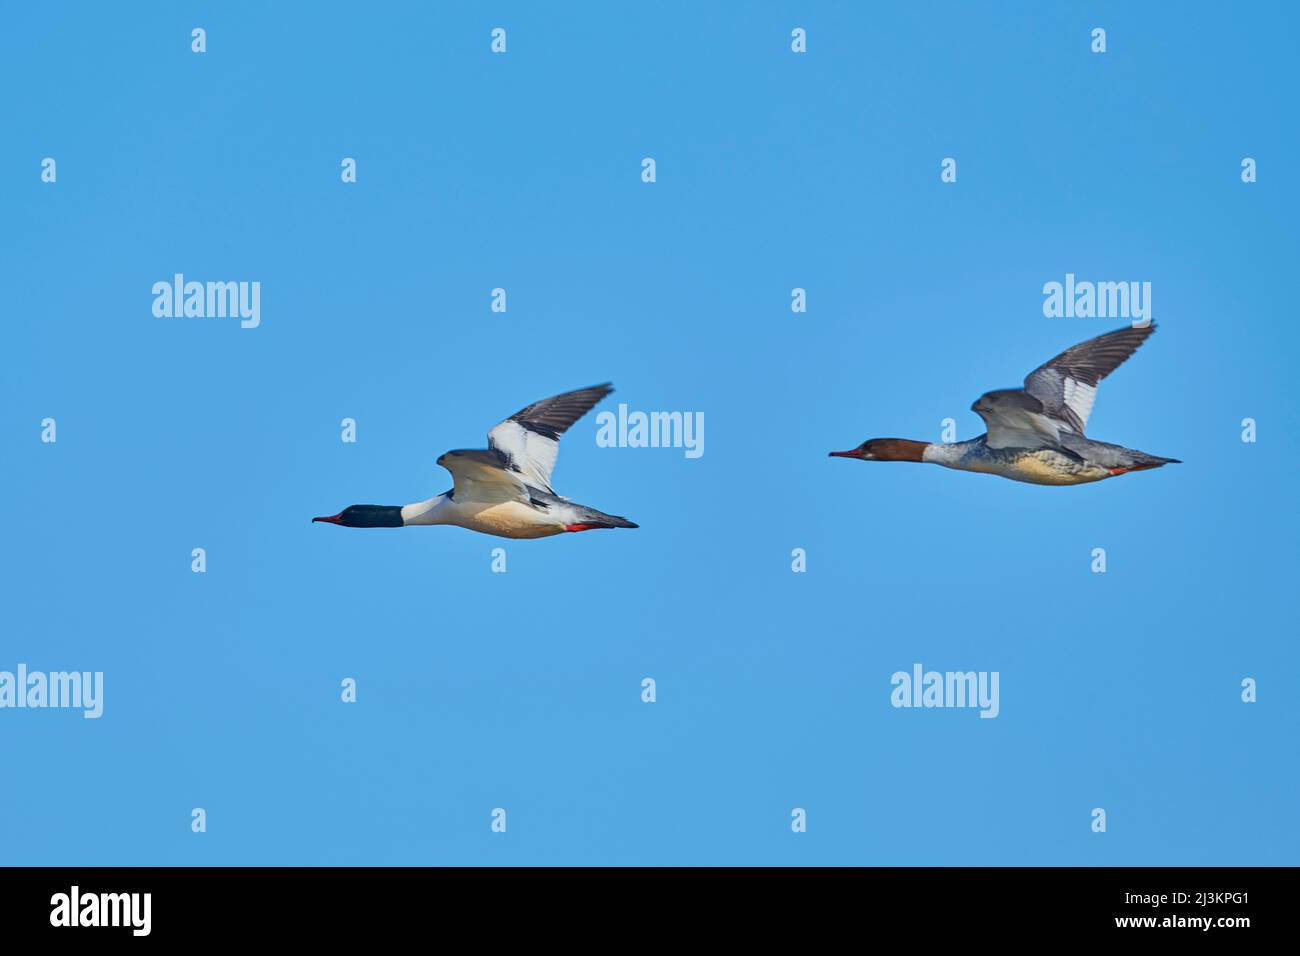 Two Common mergansers or goosanders (Mergus merganser) in flight in a bright blue sky; Bavaria, Germany Stock Photo